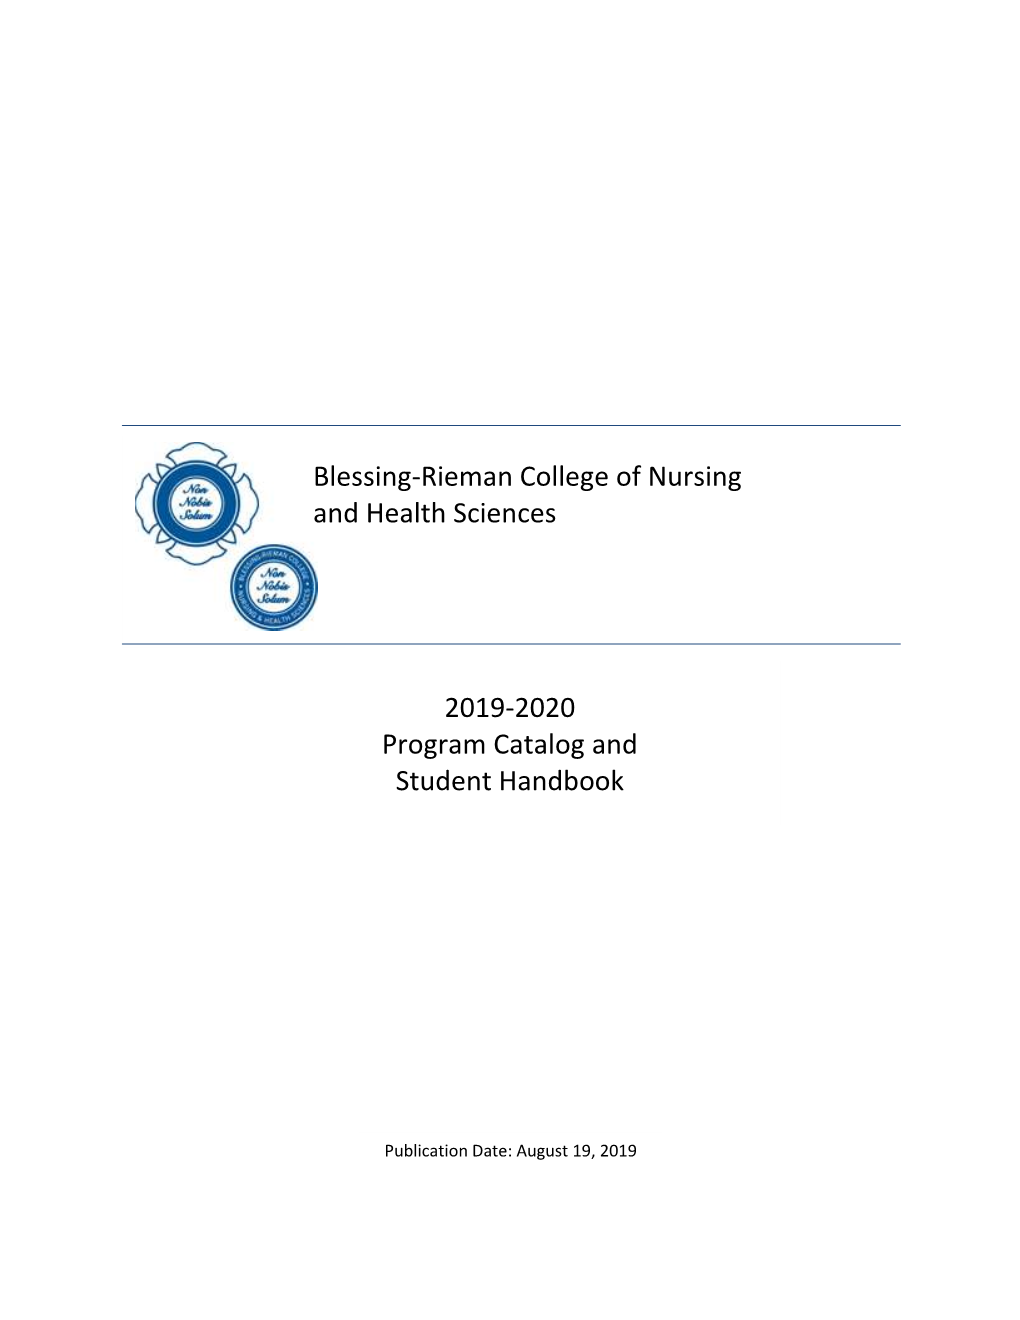 2019-2020 Program Catalog and Student Handbook Blessing